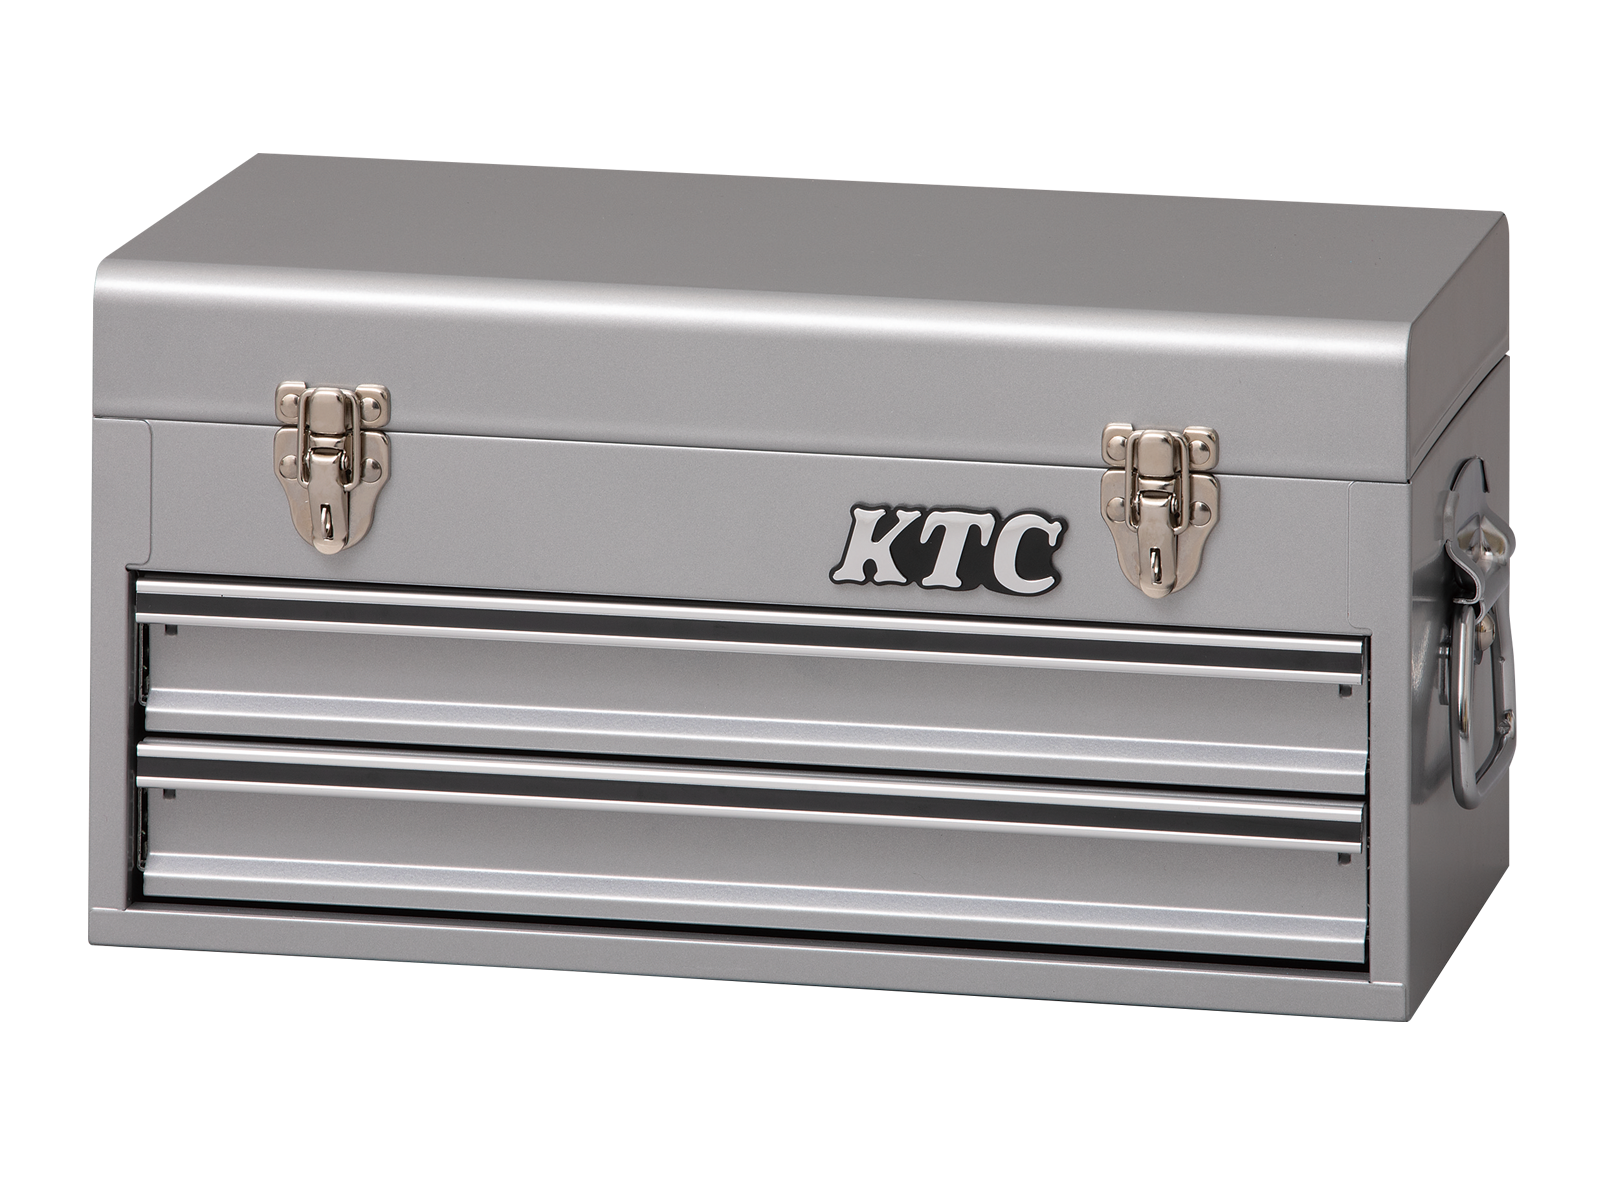 KTC KTC ツールチェスト レッド SKX0102 工具箱